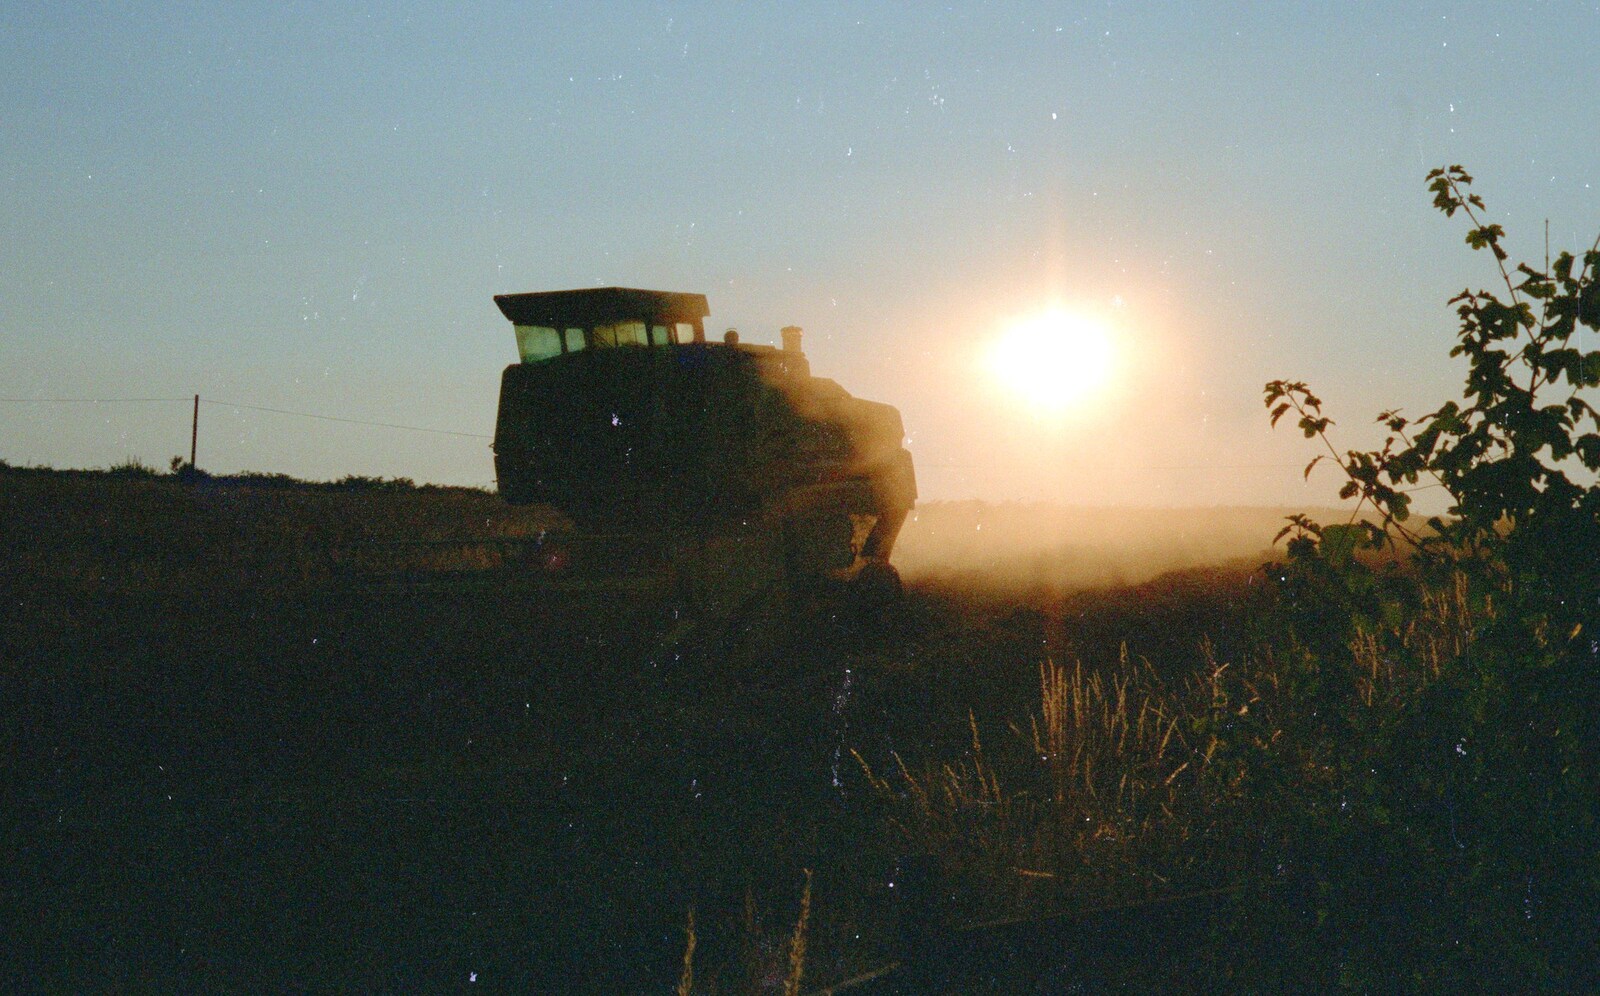 Combine Harvester in the sunset from Summer Days on Pitt Farm, Harbertonford, Devon - 17th July 1989